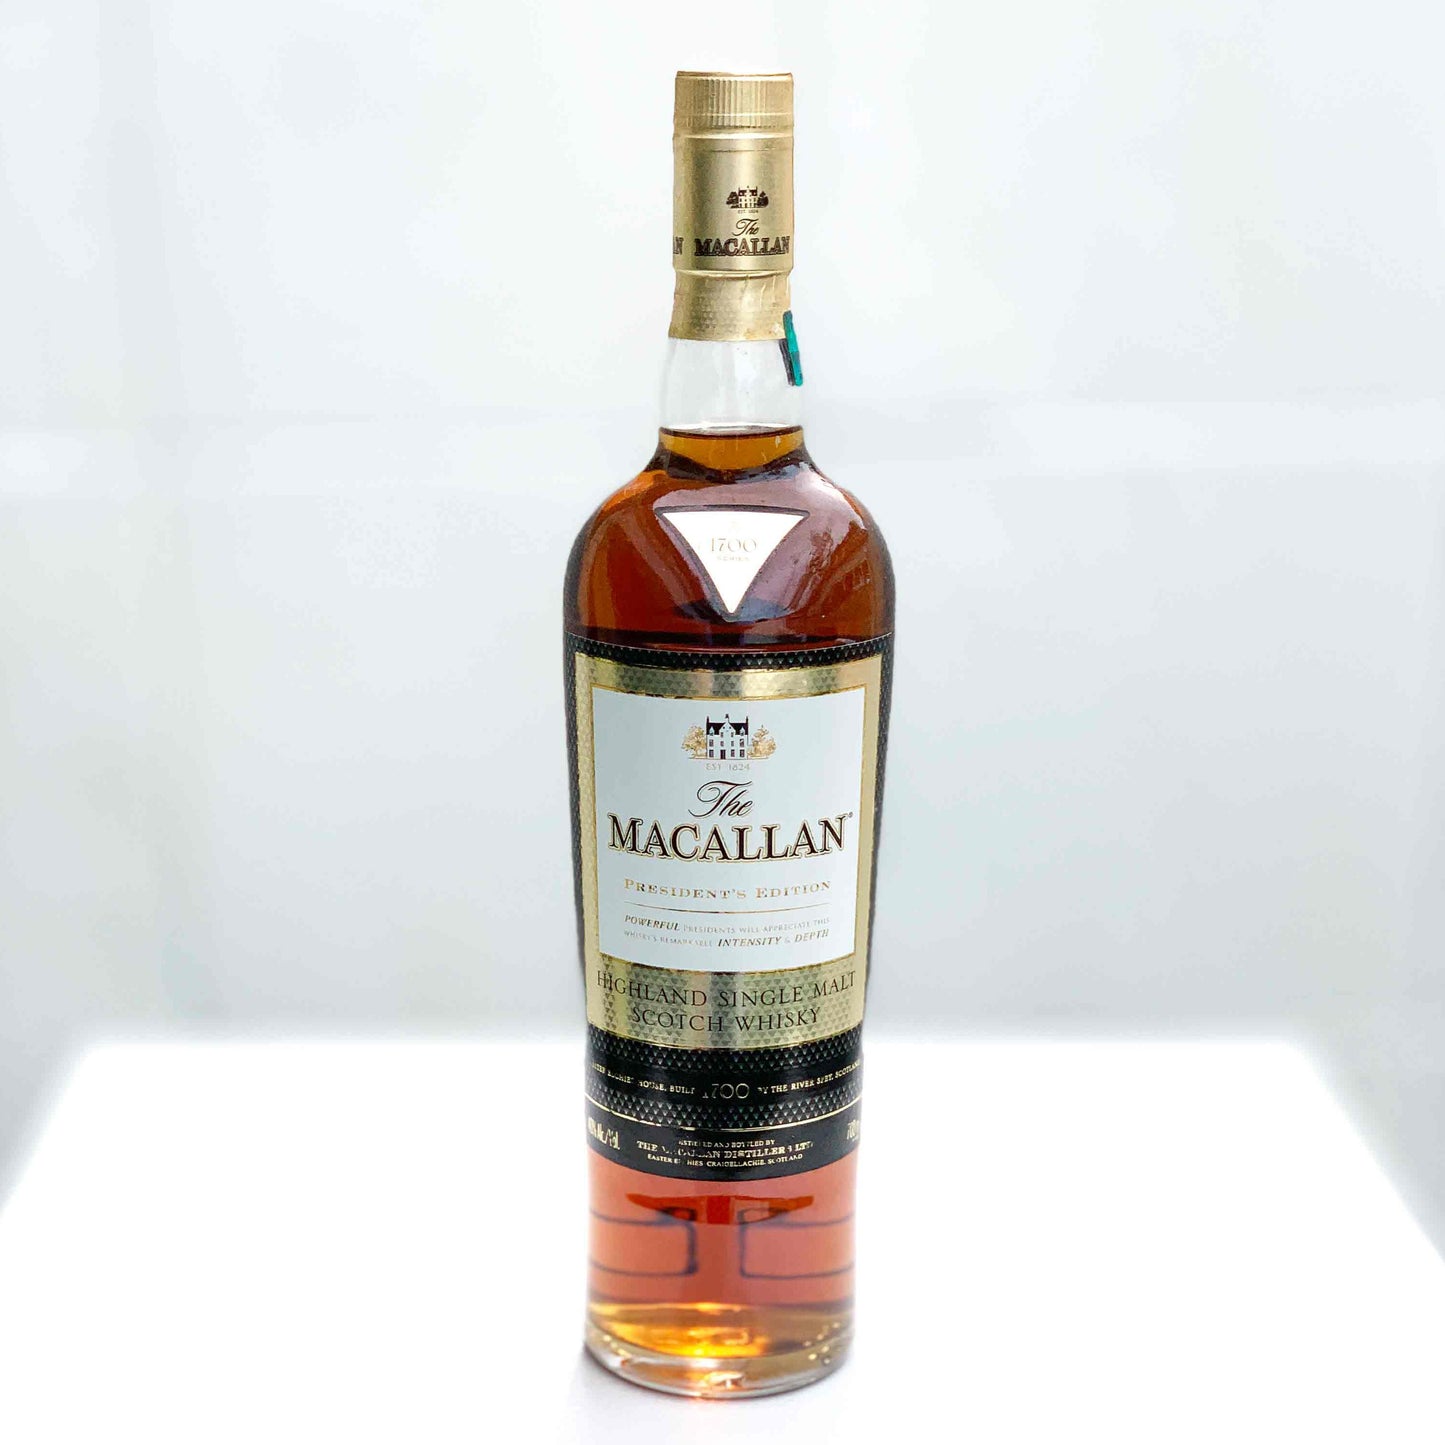 The Macallan President’s Edition Single Malt Scotch Whisky